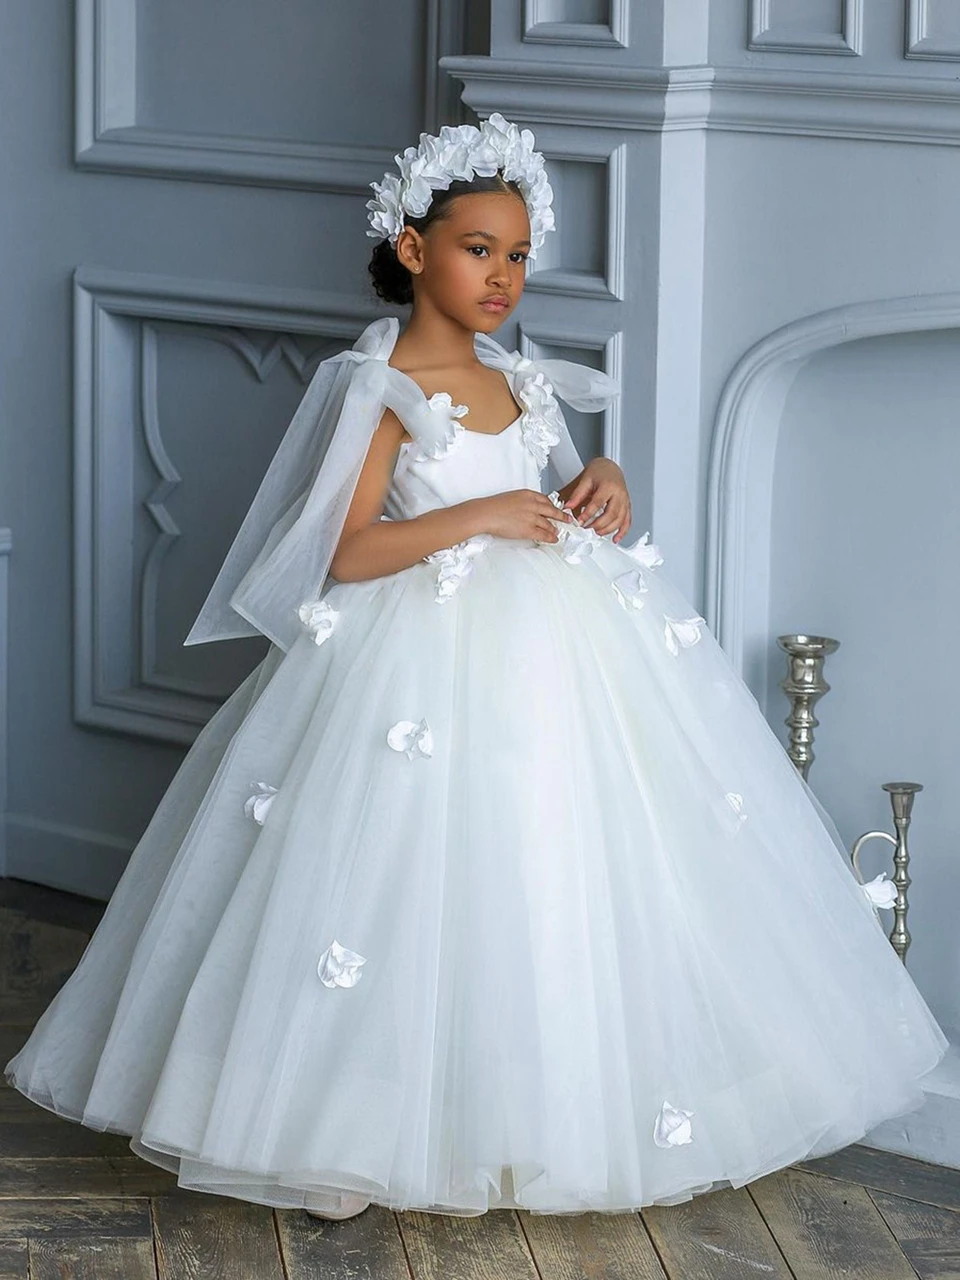 

White Bow Sleeveless Flower Girl Dresses For Weddings Elegant Tulle Appliques First Communion Dress Kids Formal Party Gown